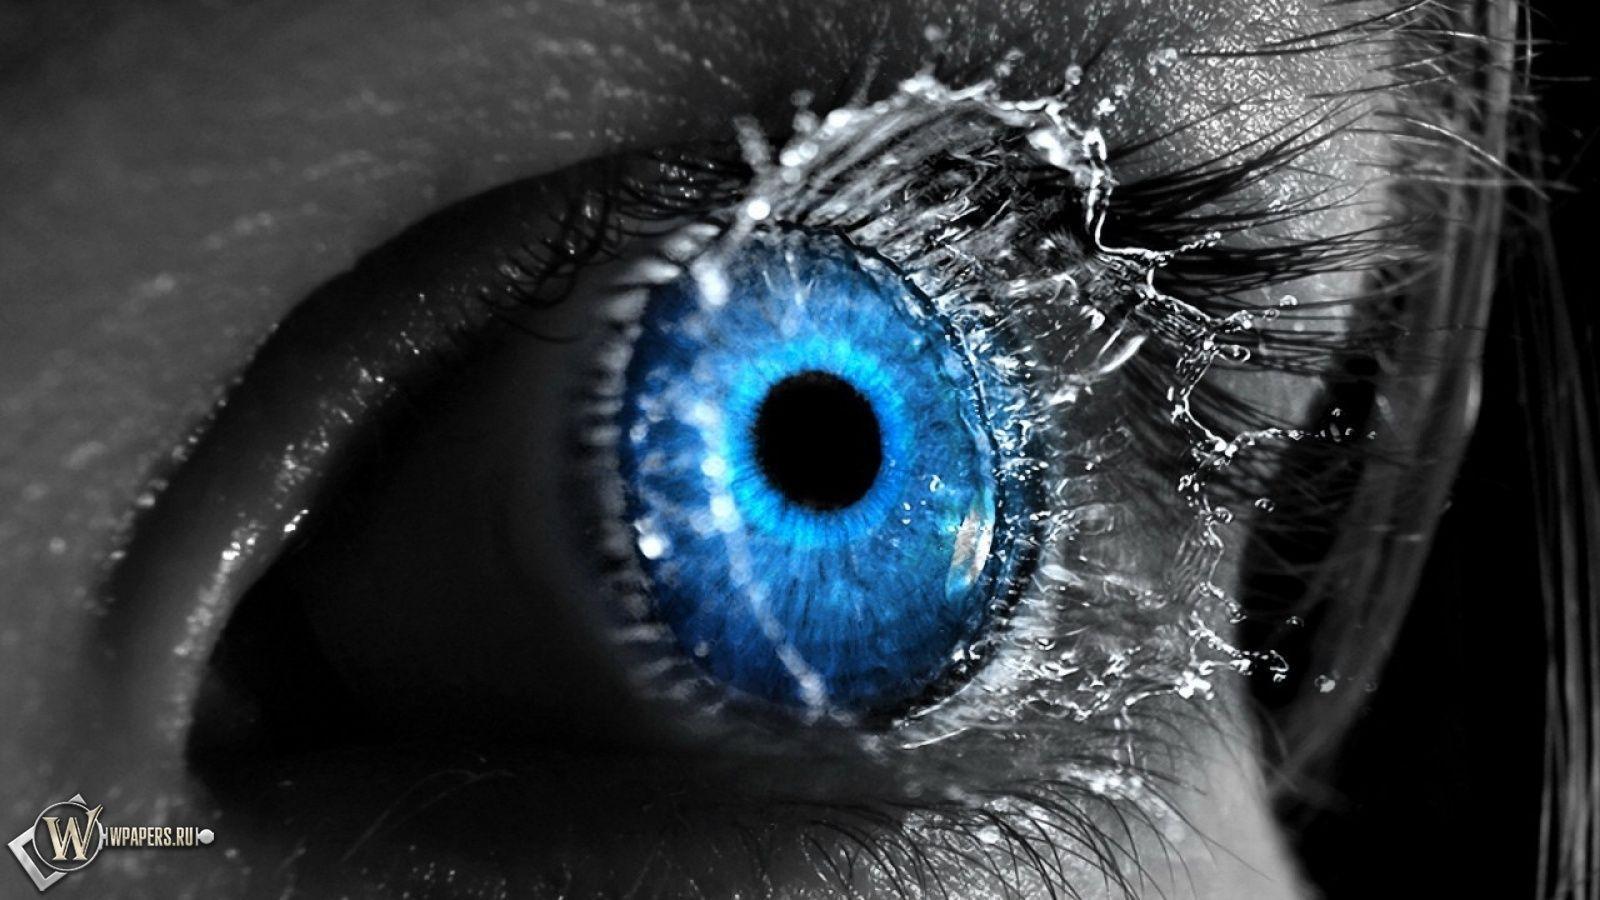 Astonishing Abstract Blue Eyes Wallpaper 1600x900PX HD Blue Eyes